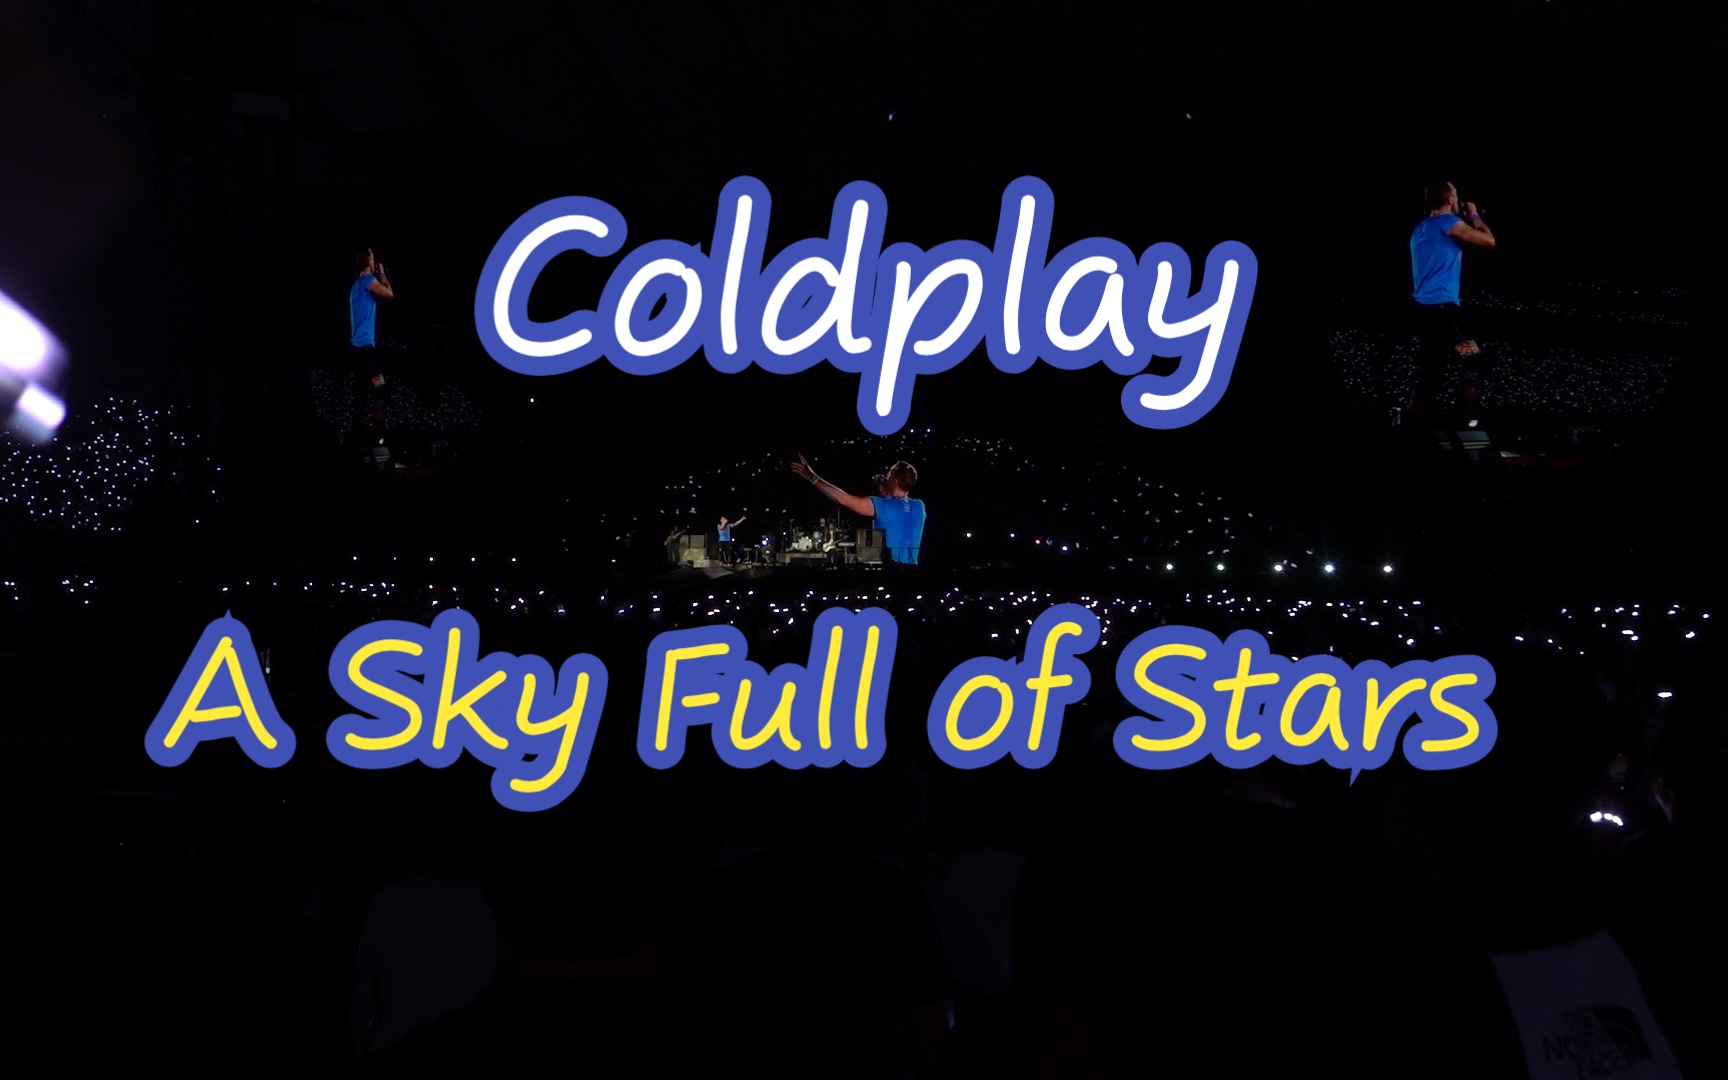 coldplay东京演唱会《a sky full of stars》繁星闪烁大型蹦迪现象